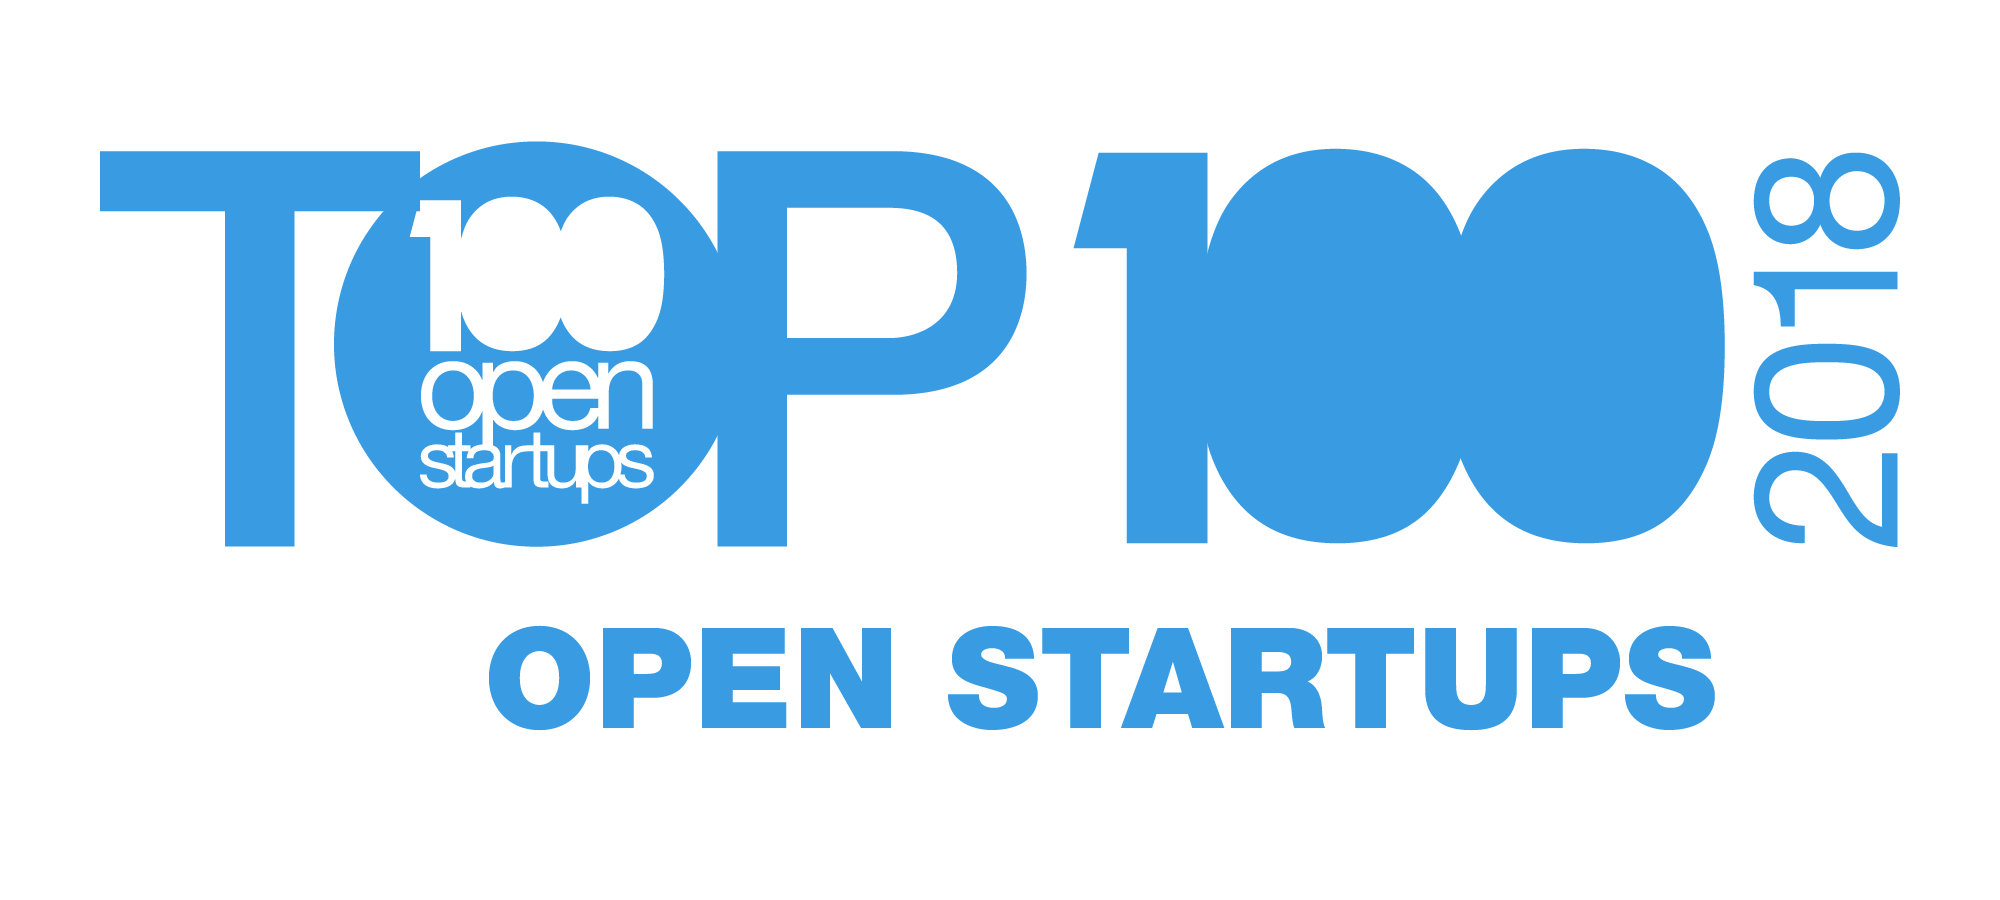 Logpyx no ranking das 100 OpenStartups